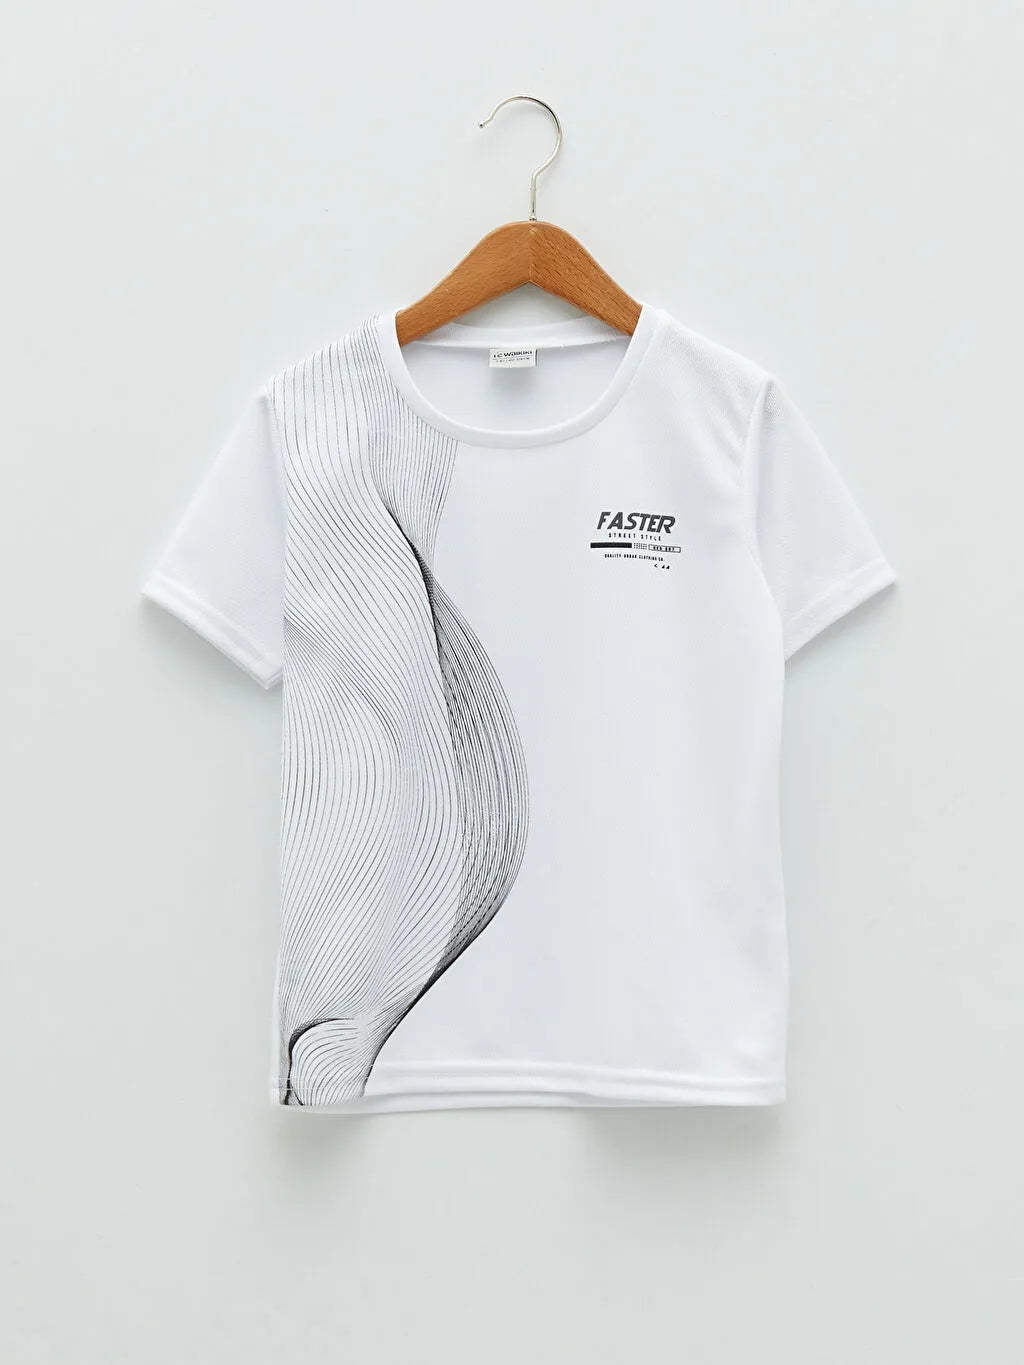 Crew Neck Printed Short Sleeve Boy T-Shirt